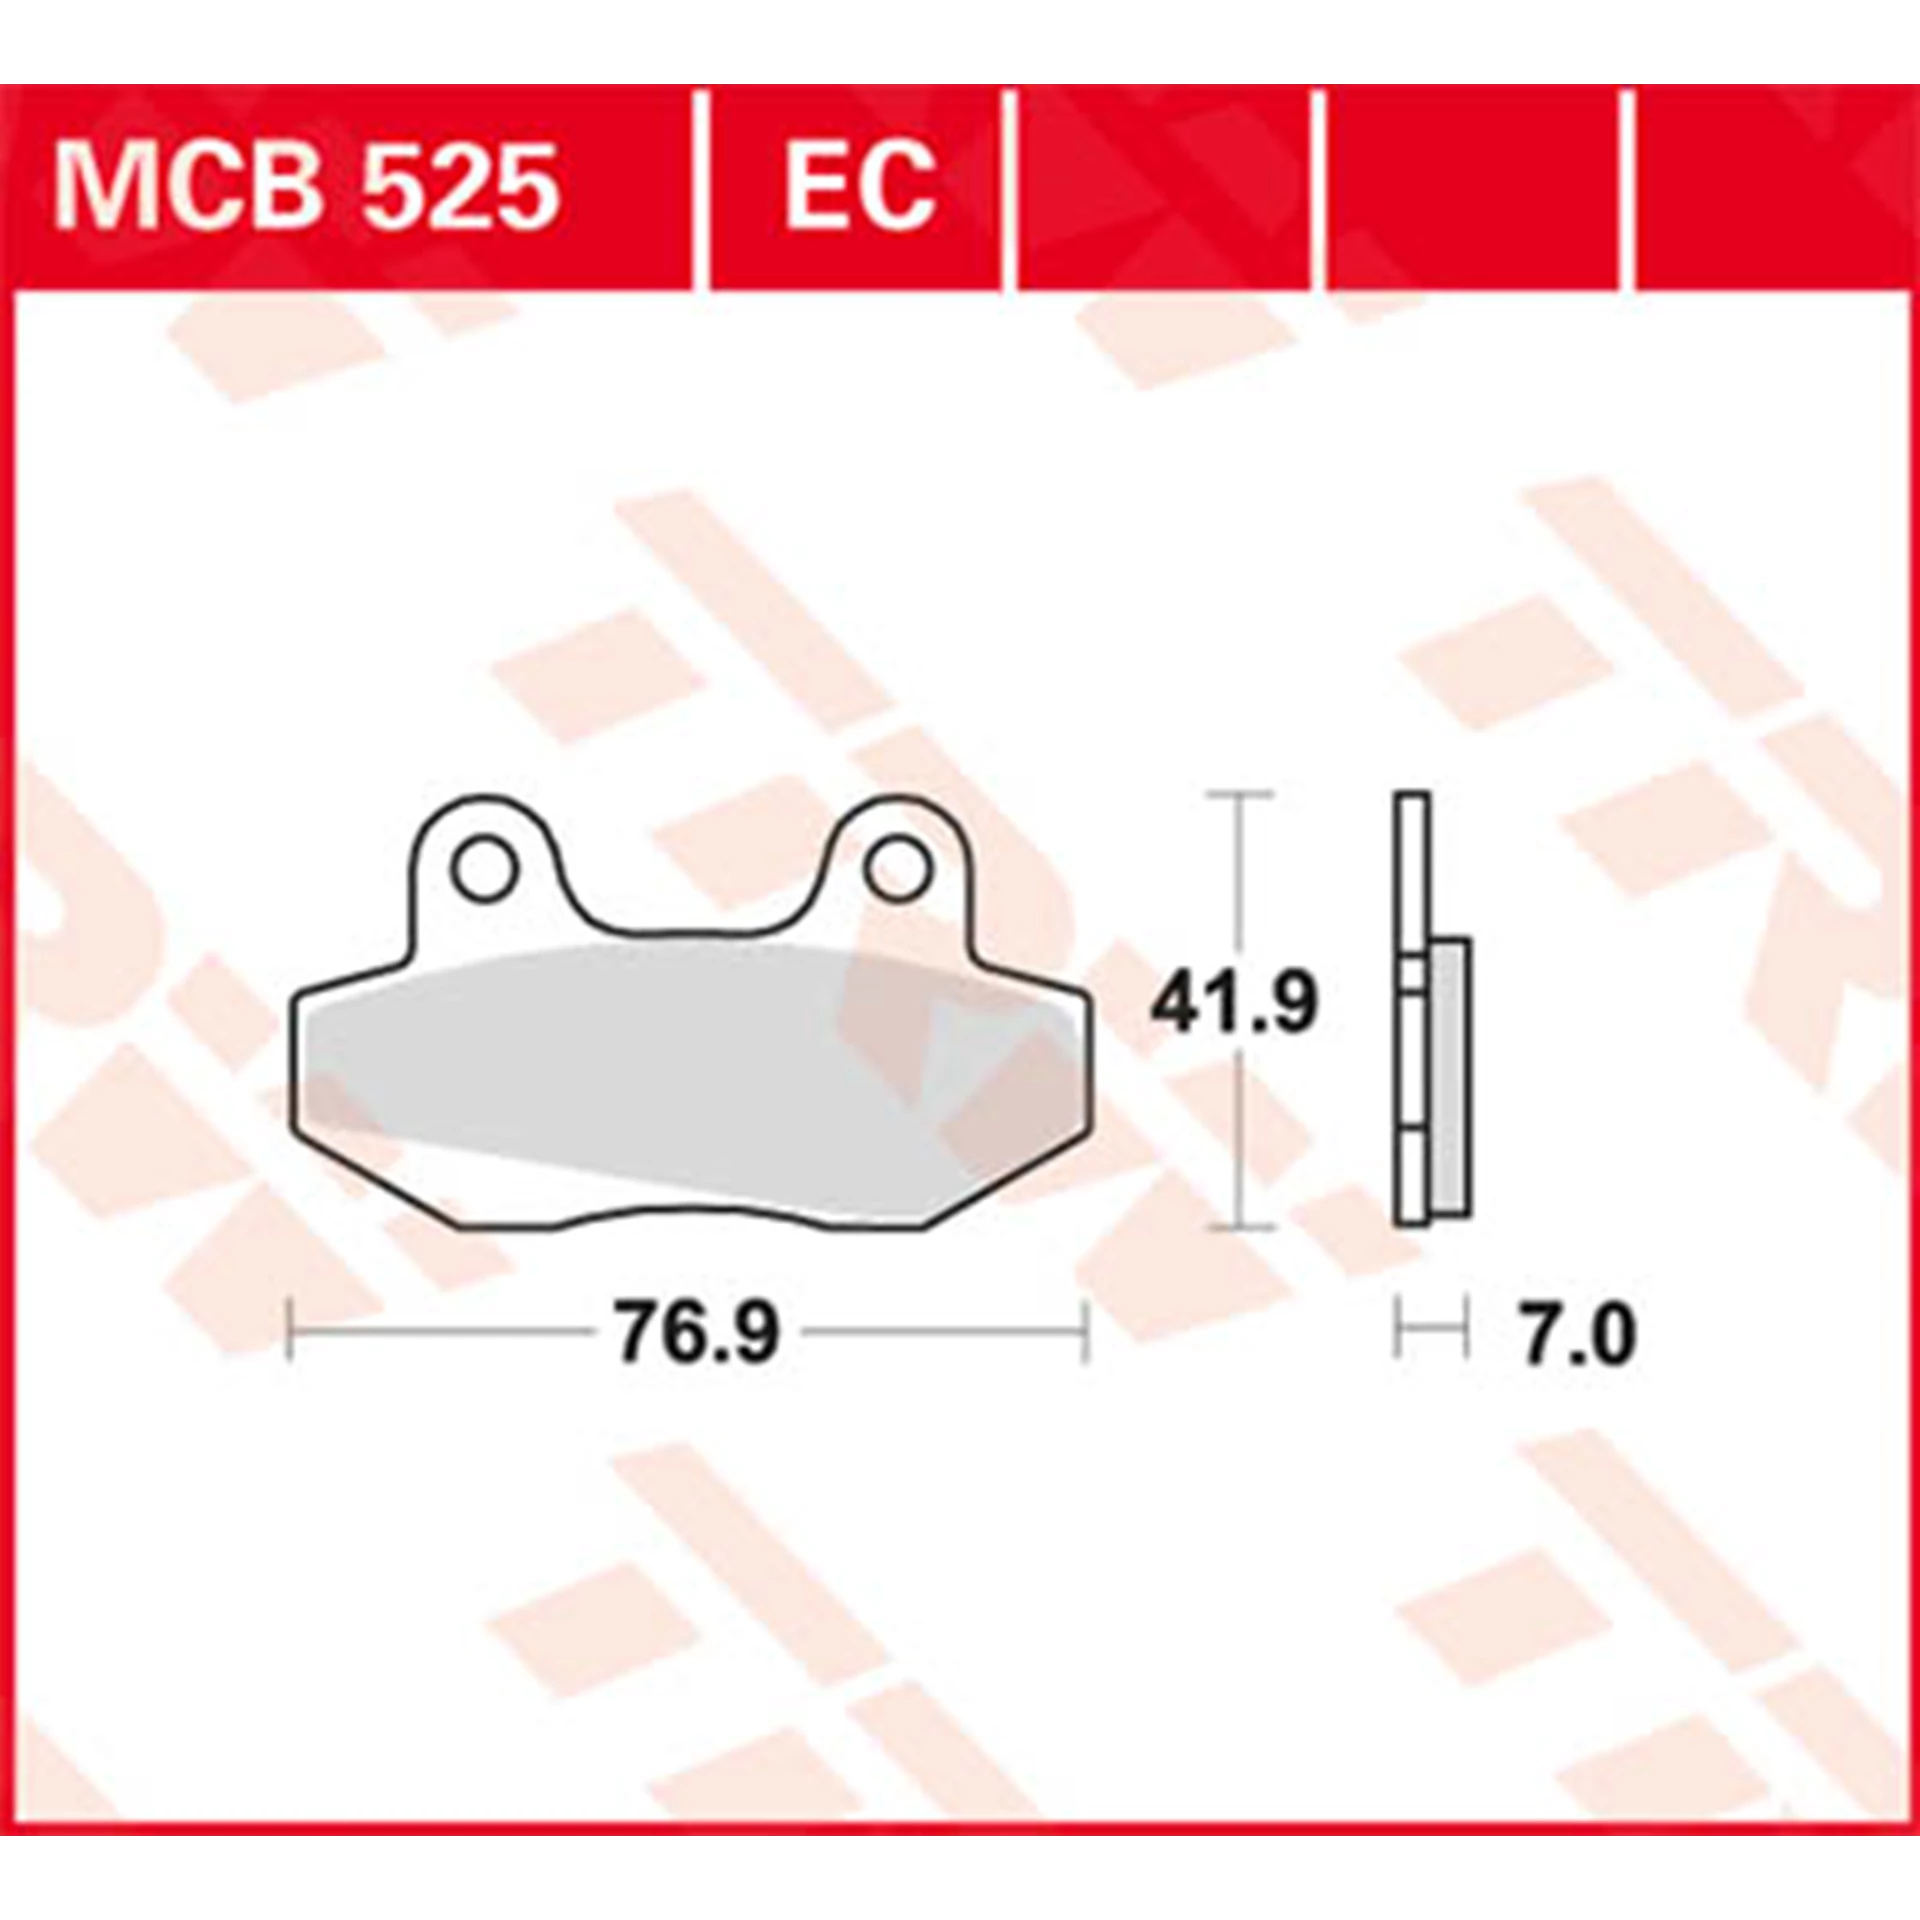 MCB525.jpg